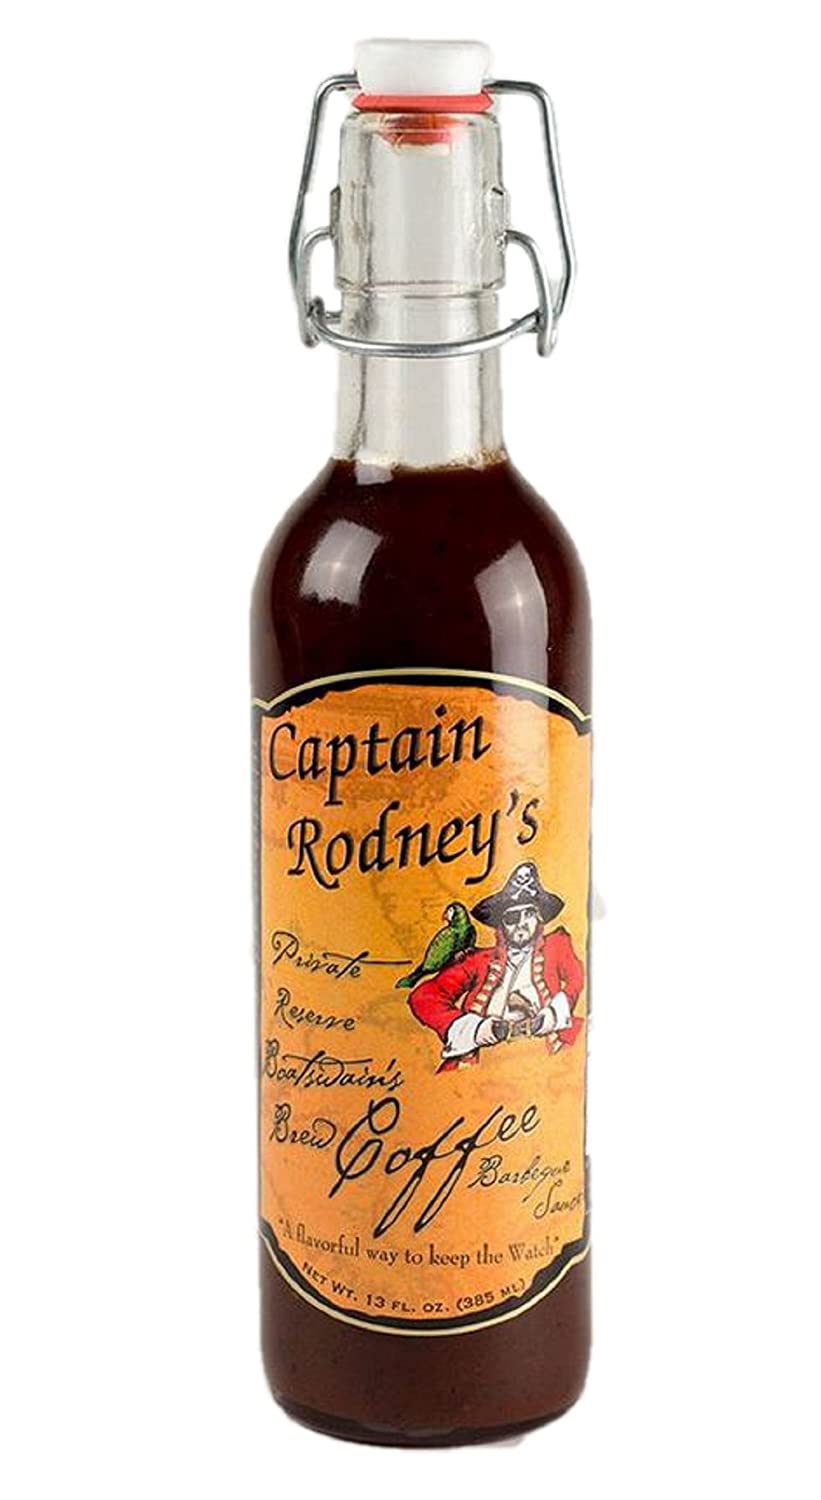 Captain Rodney's Private Reserve - Black Coffee Barbecue Sauce